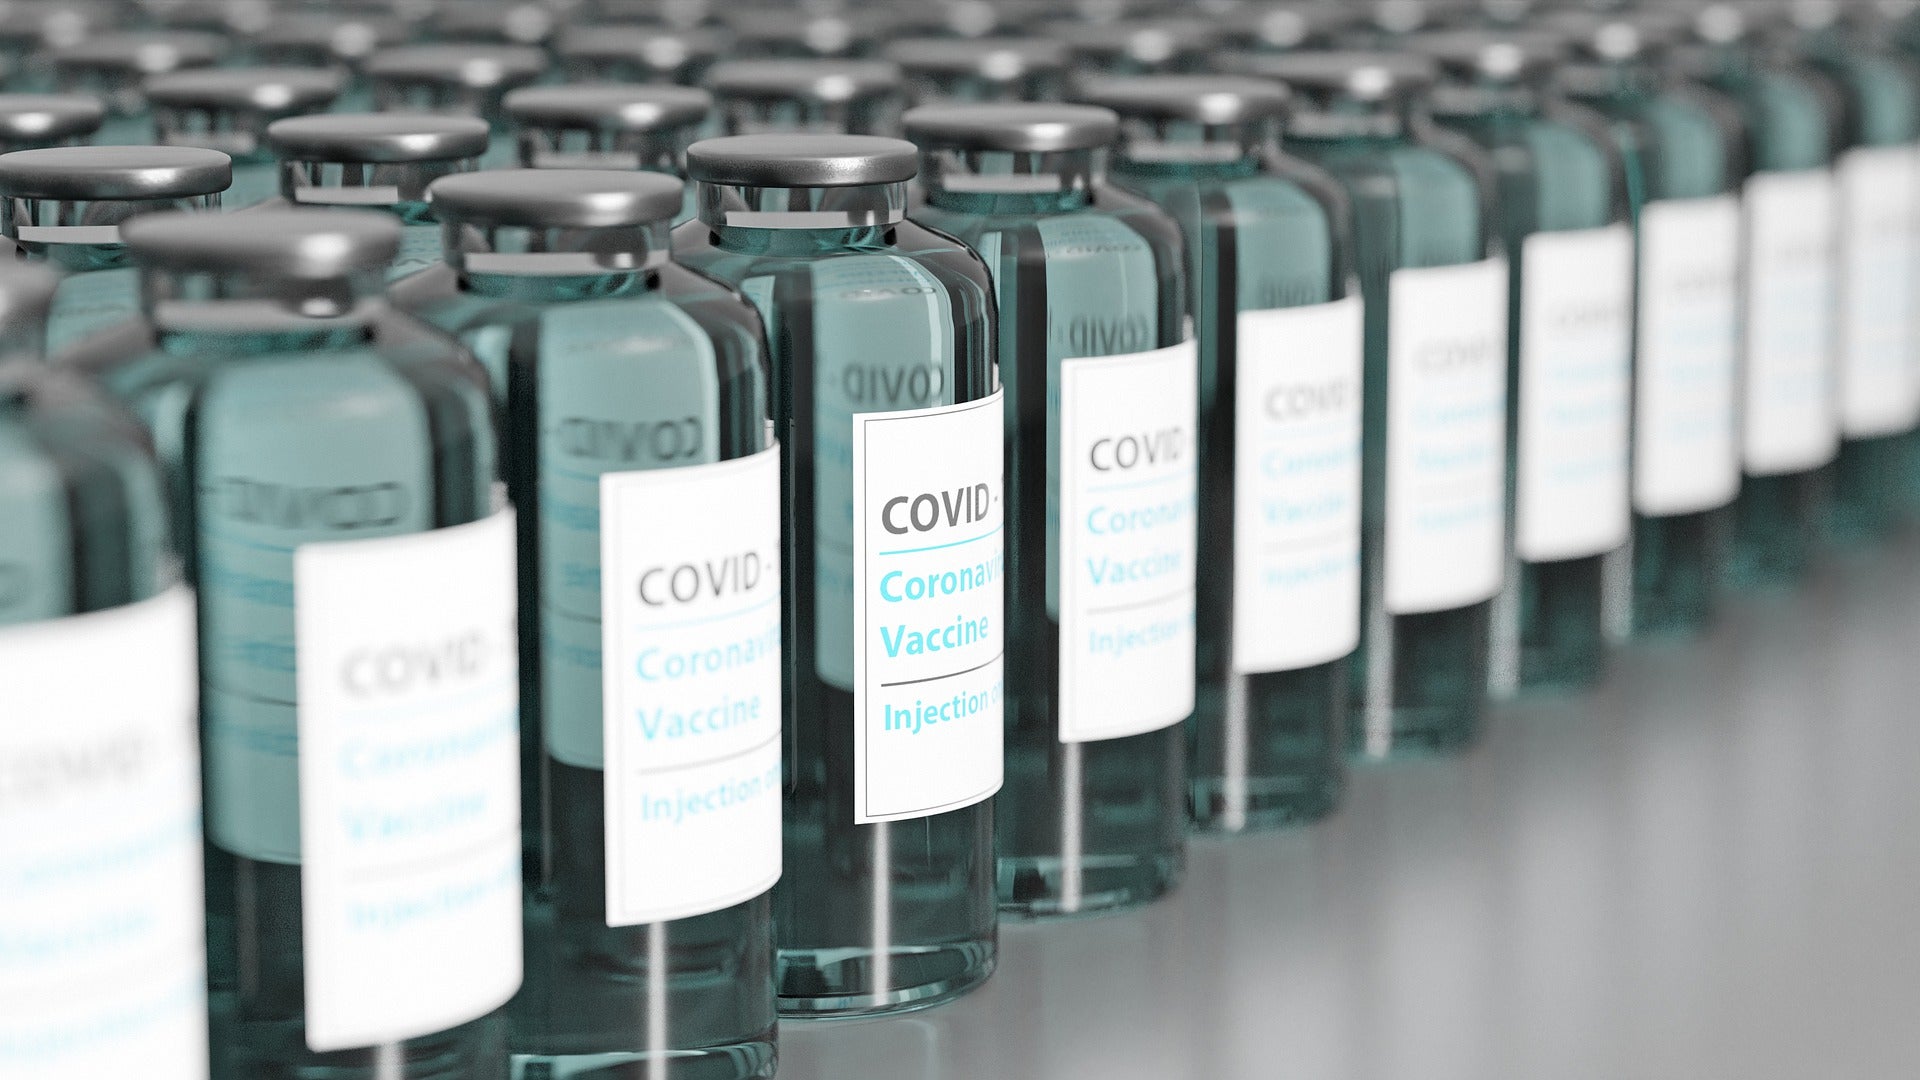 NRx Pharmaceuticals begins Phase IIb Covid-19 vaccine trial in Georgia